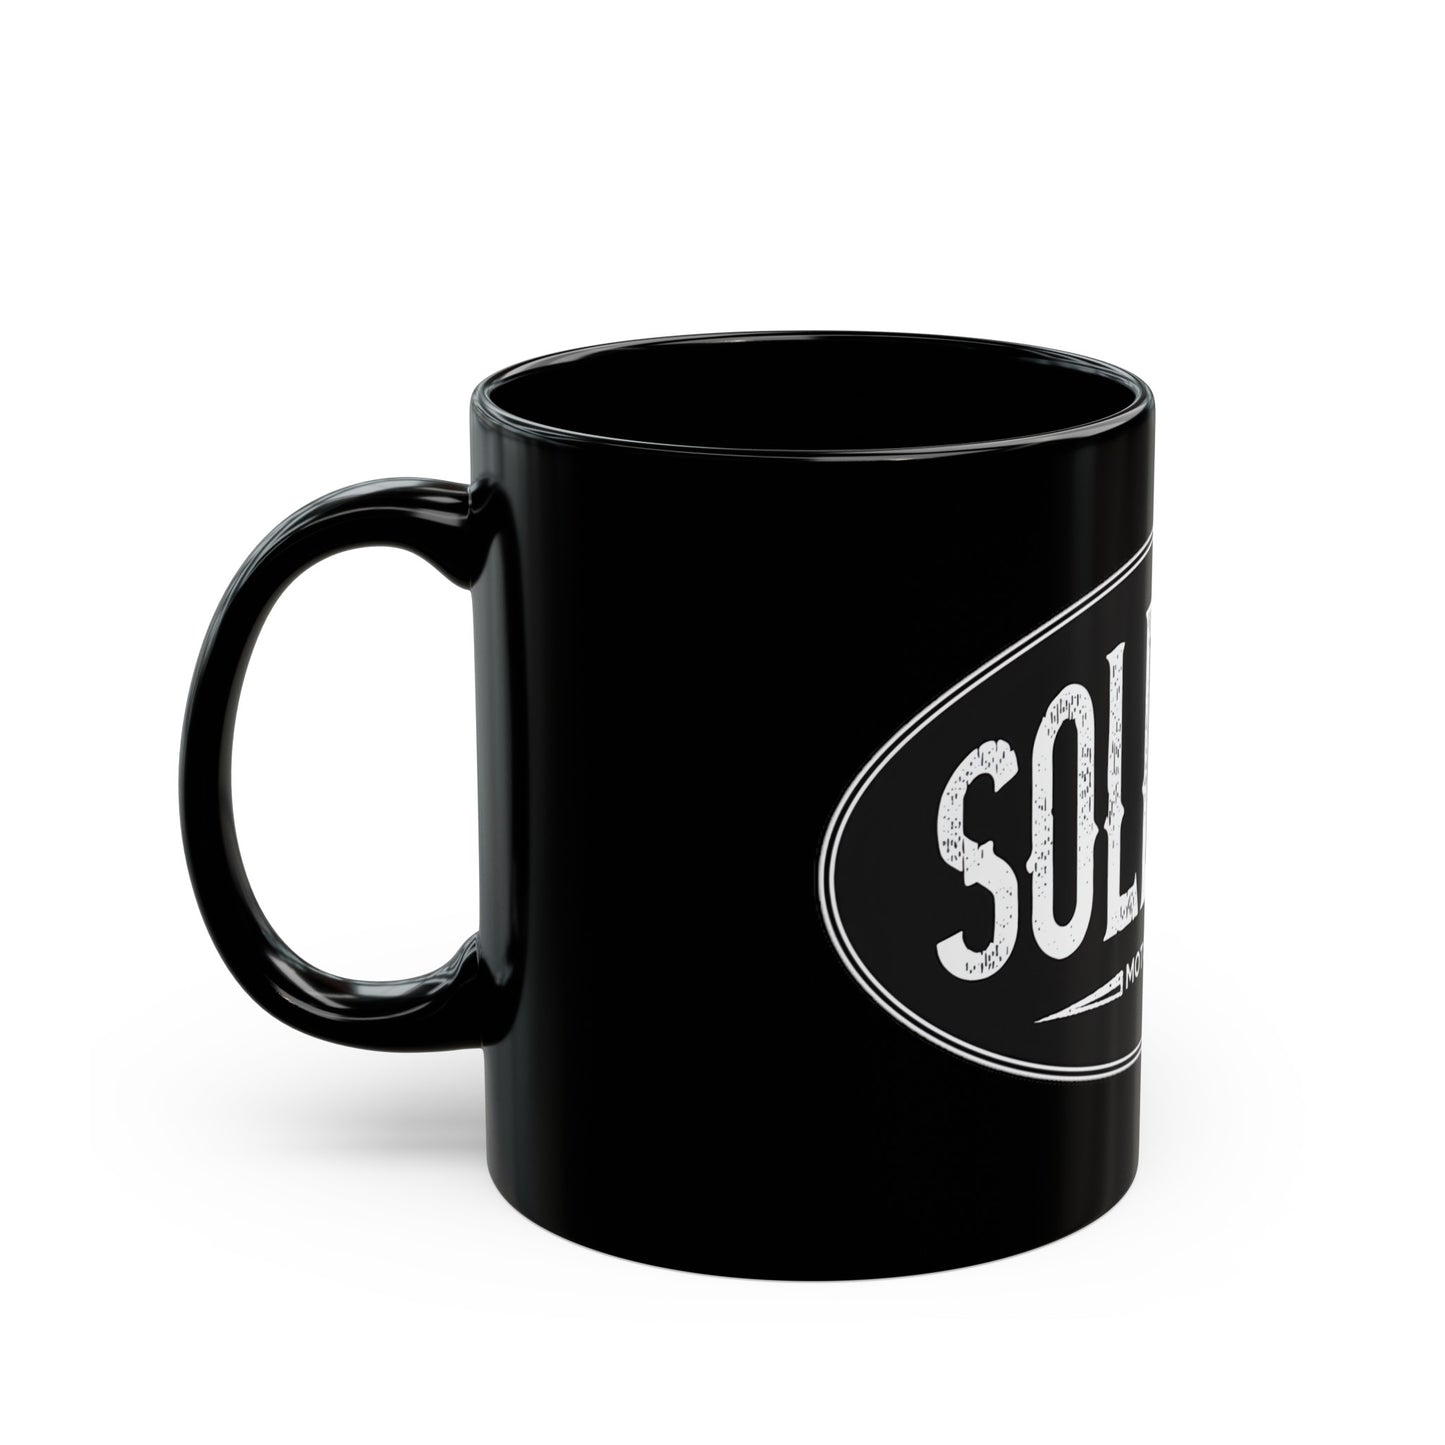 Sold Out Mug